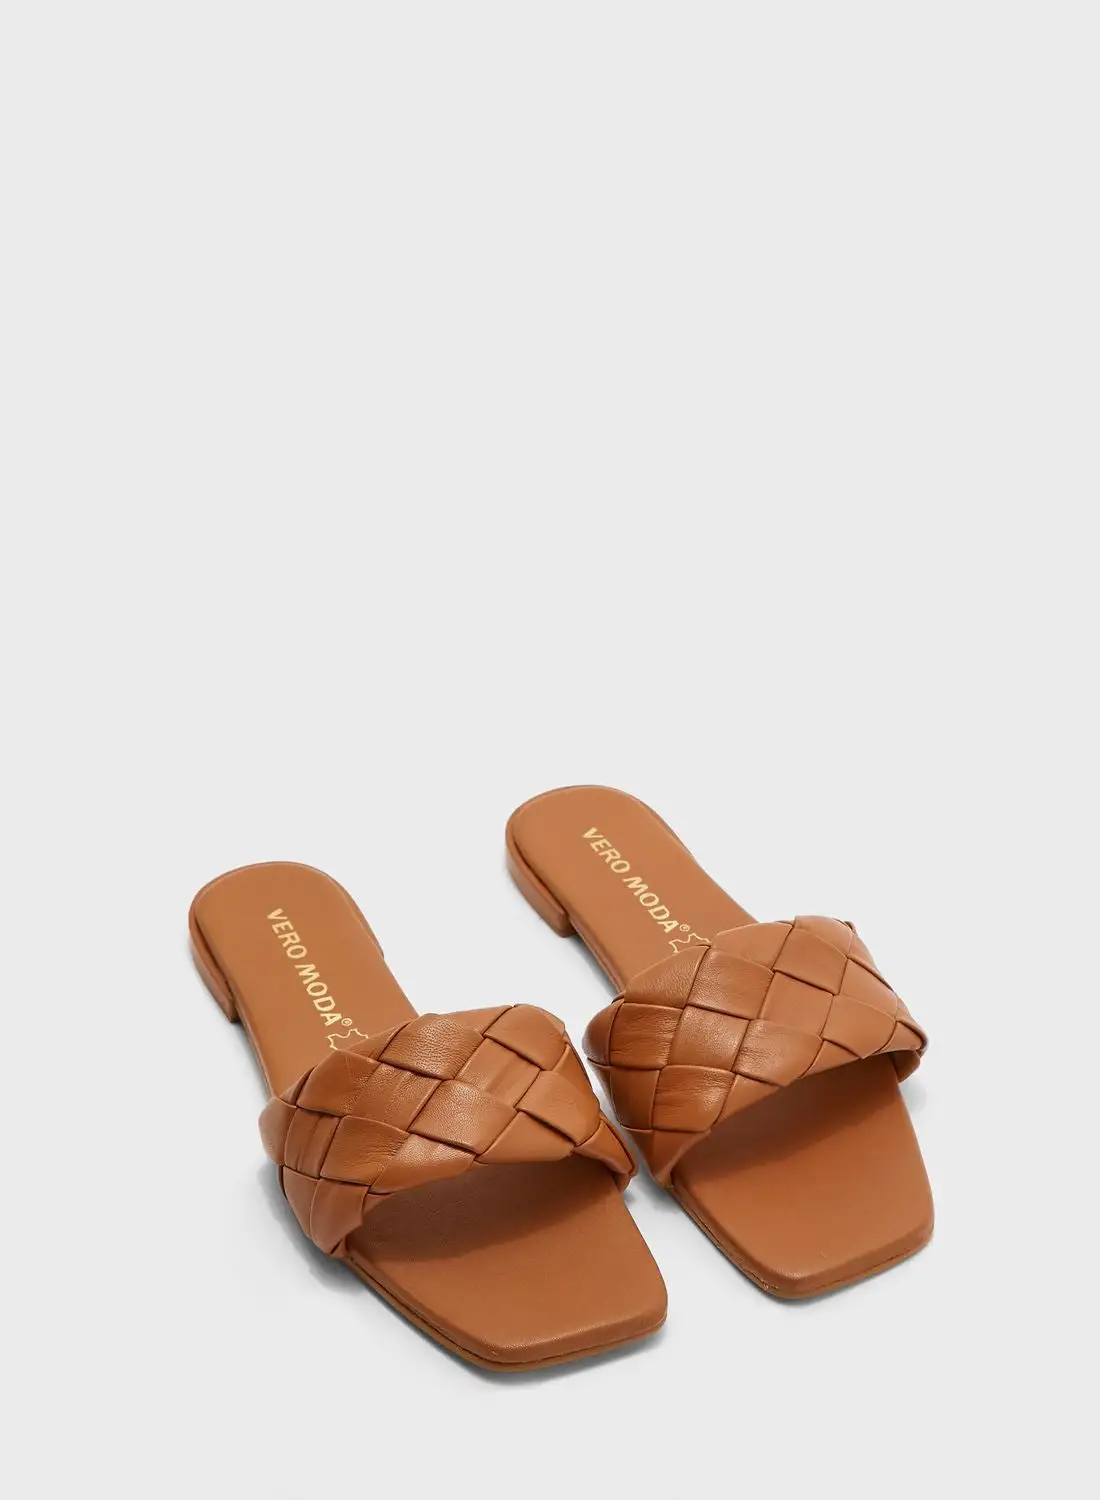 VERO MODA May Flat Sandals